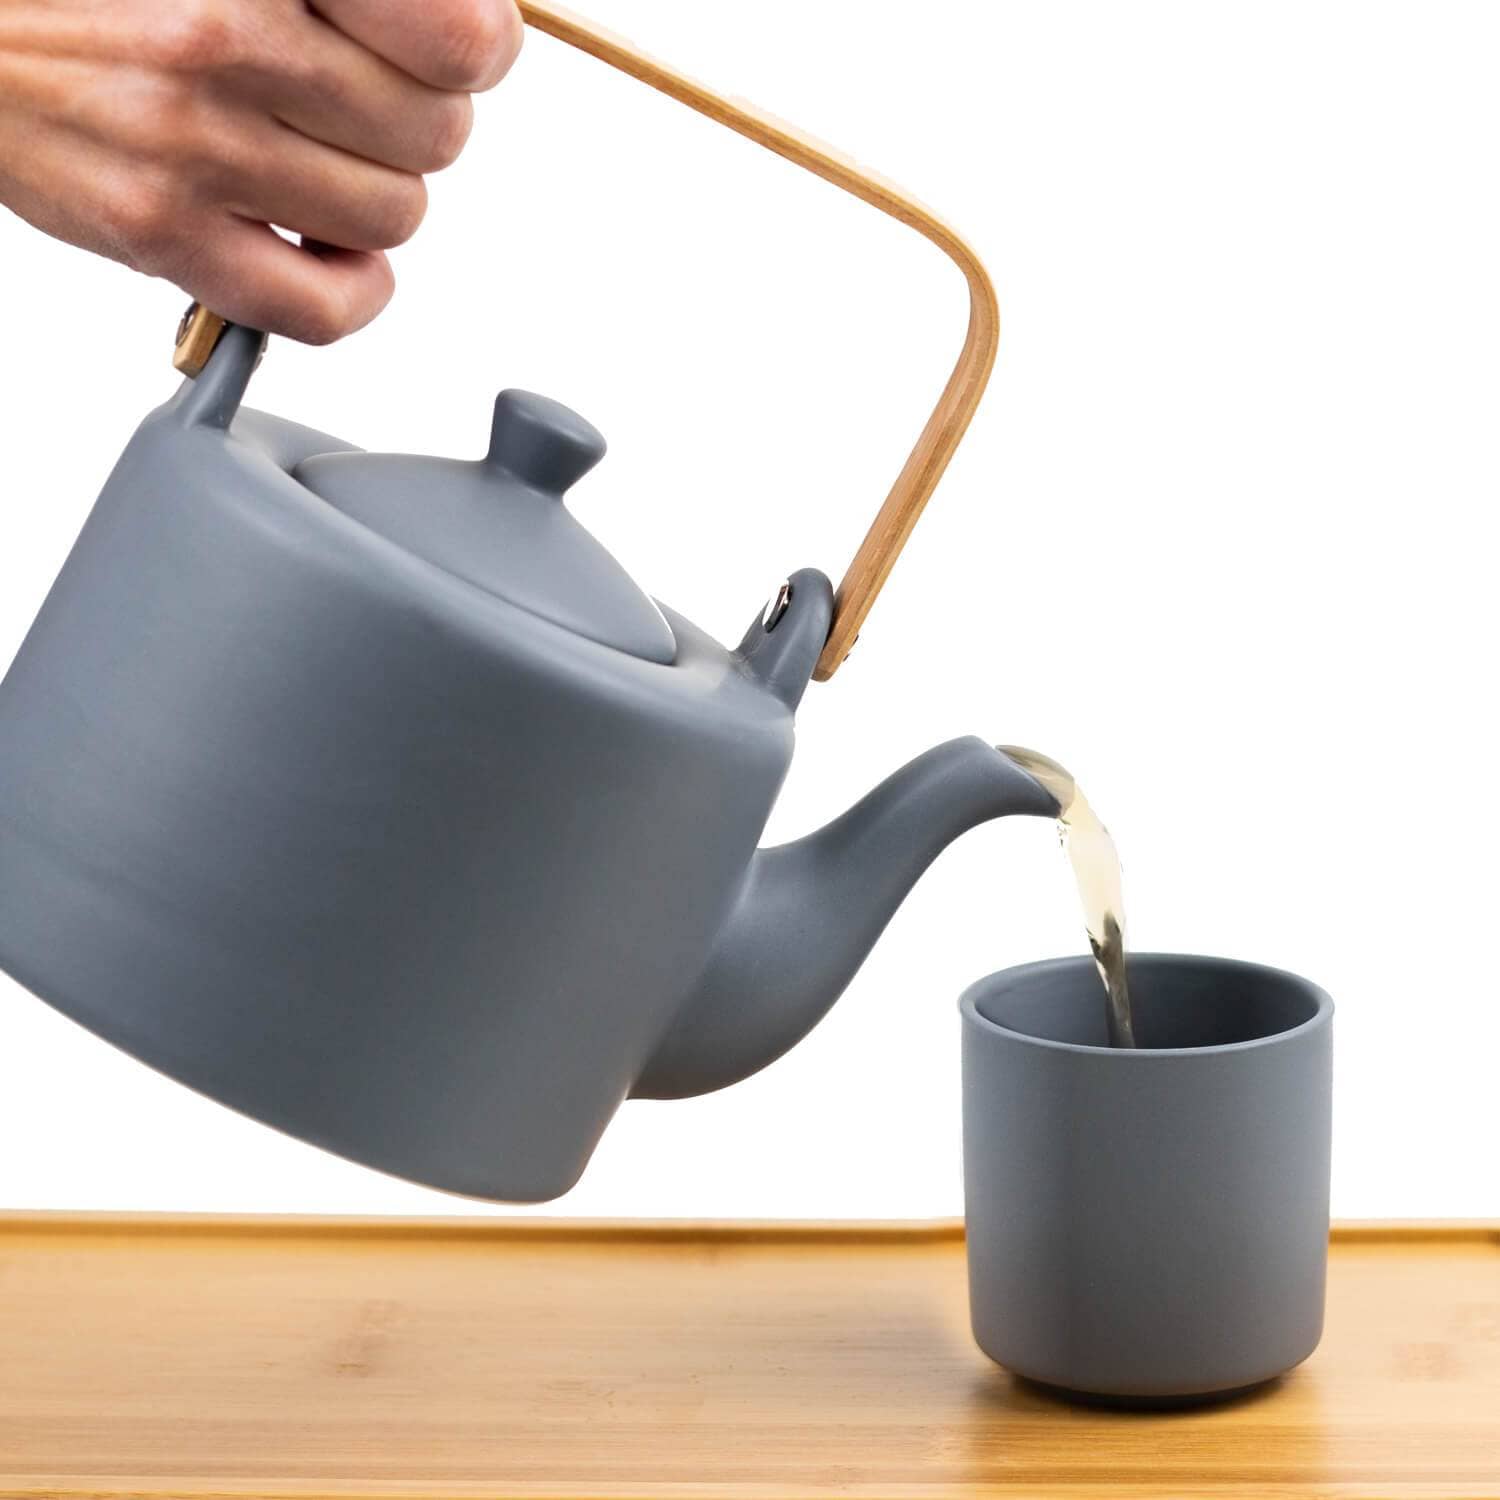 Ceramic Tea Set For 4  -  Accessories  -  Full Leaf Tea Company